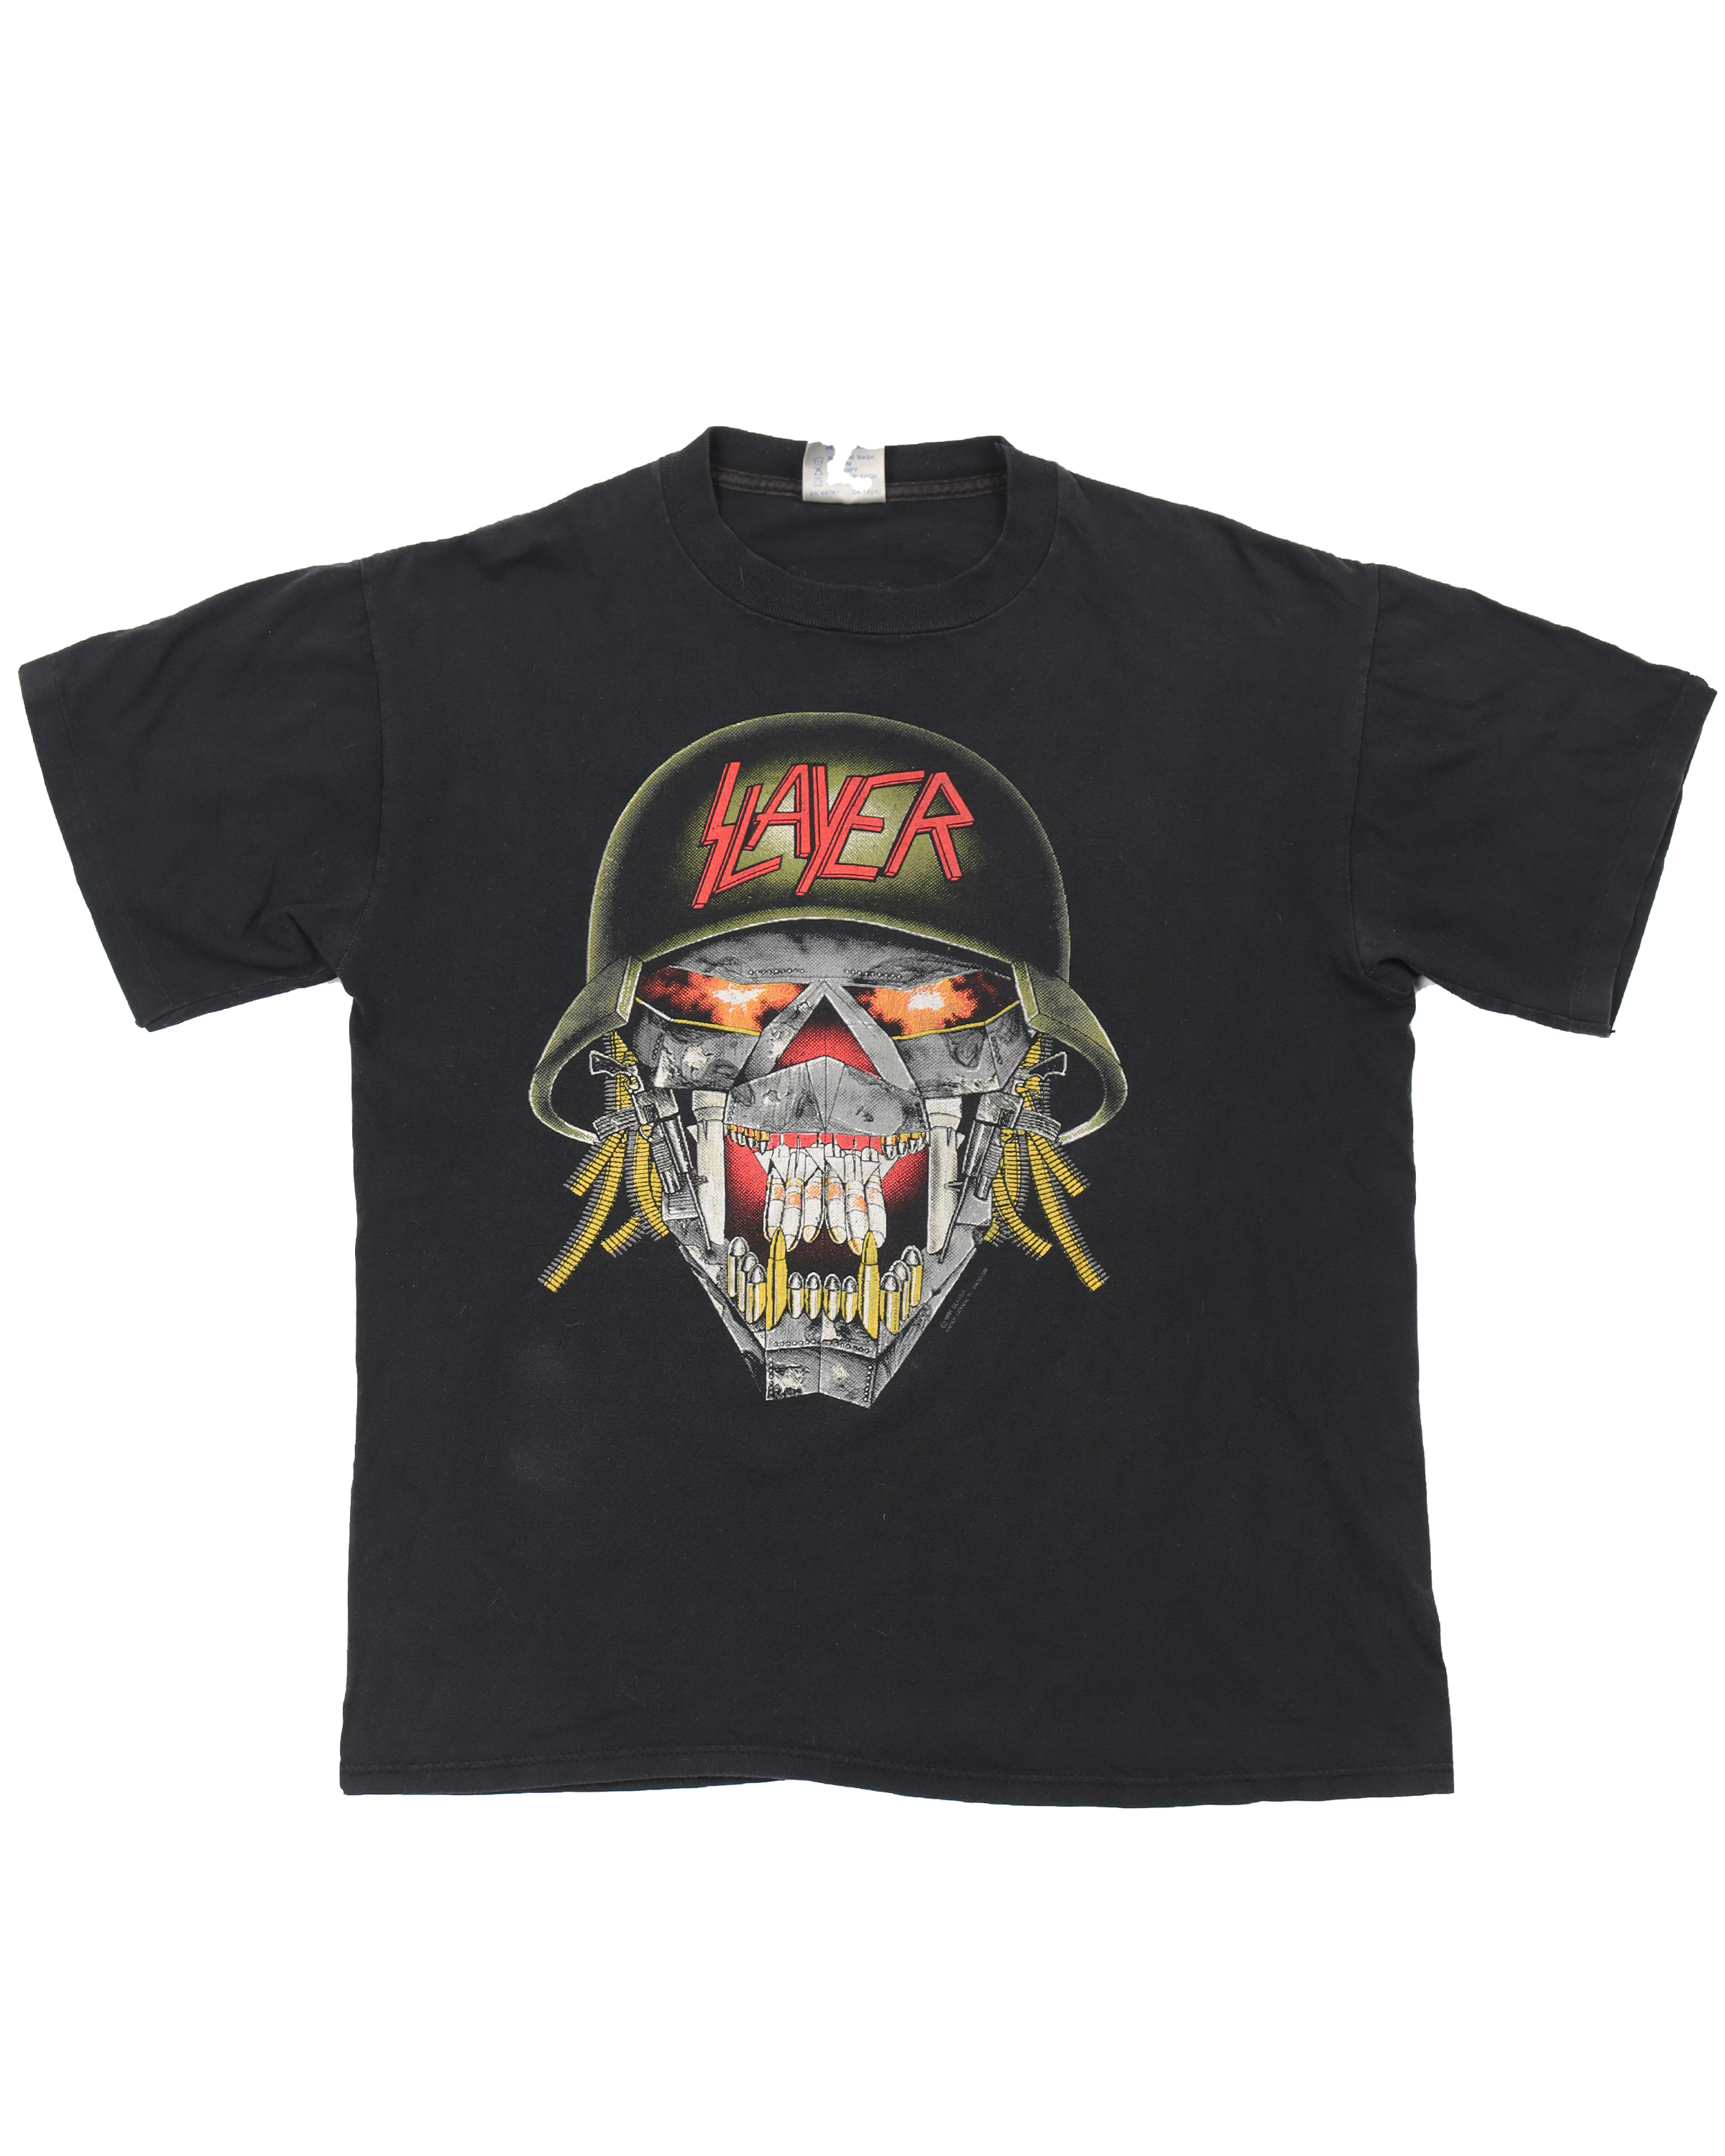 1991 Slayer North American Tour T-Shirt